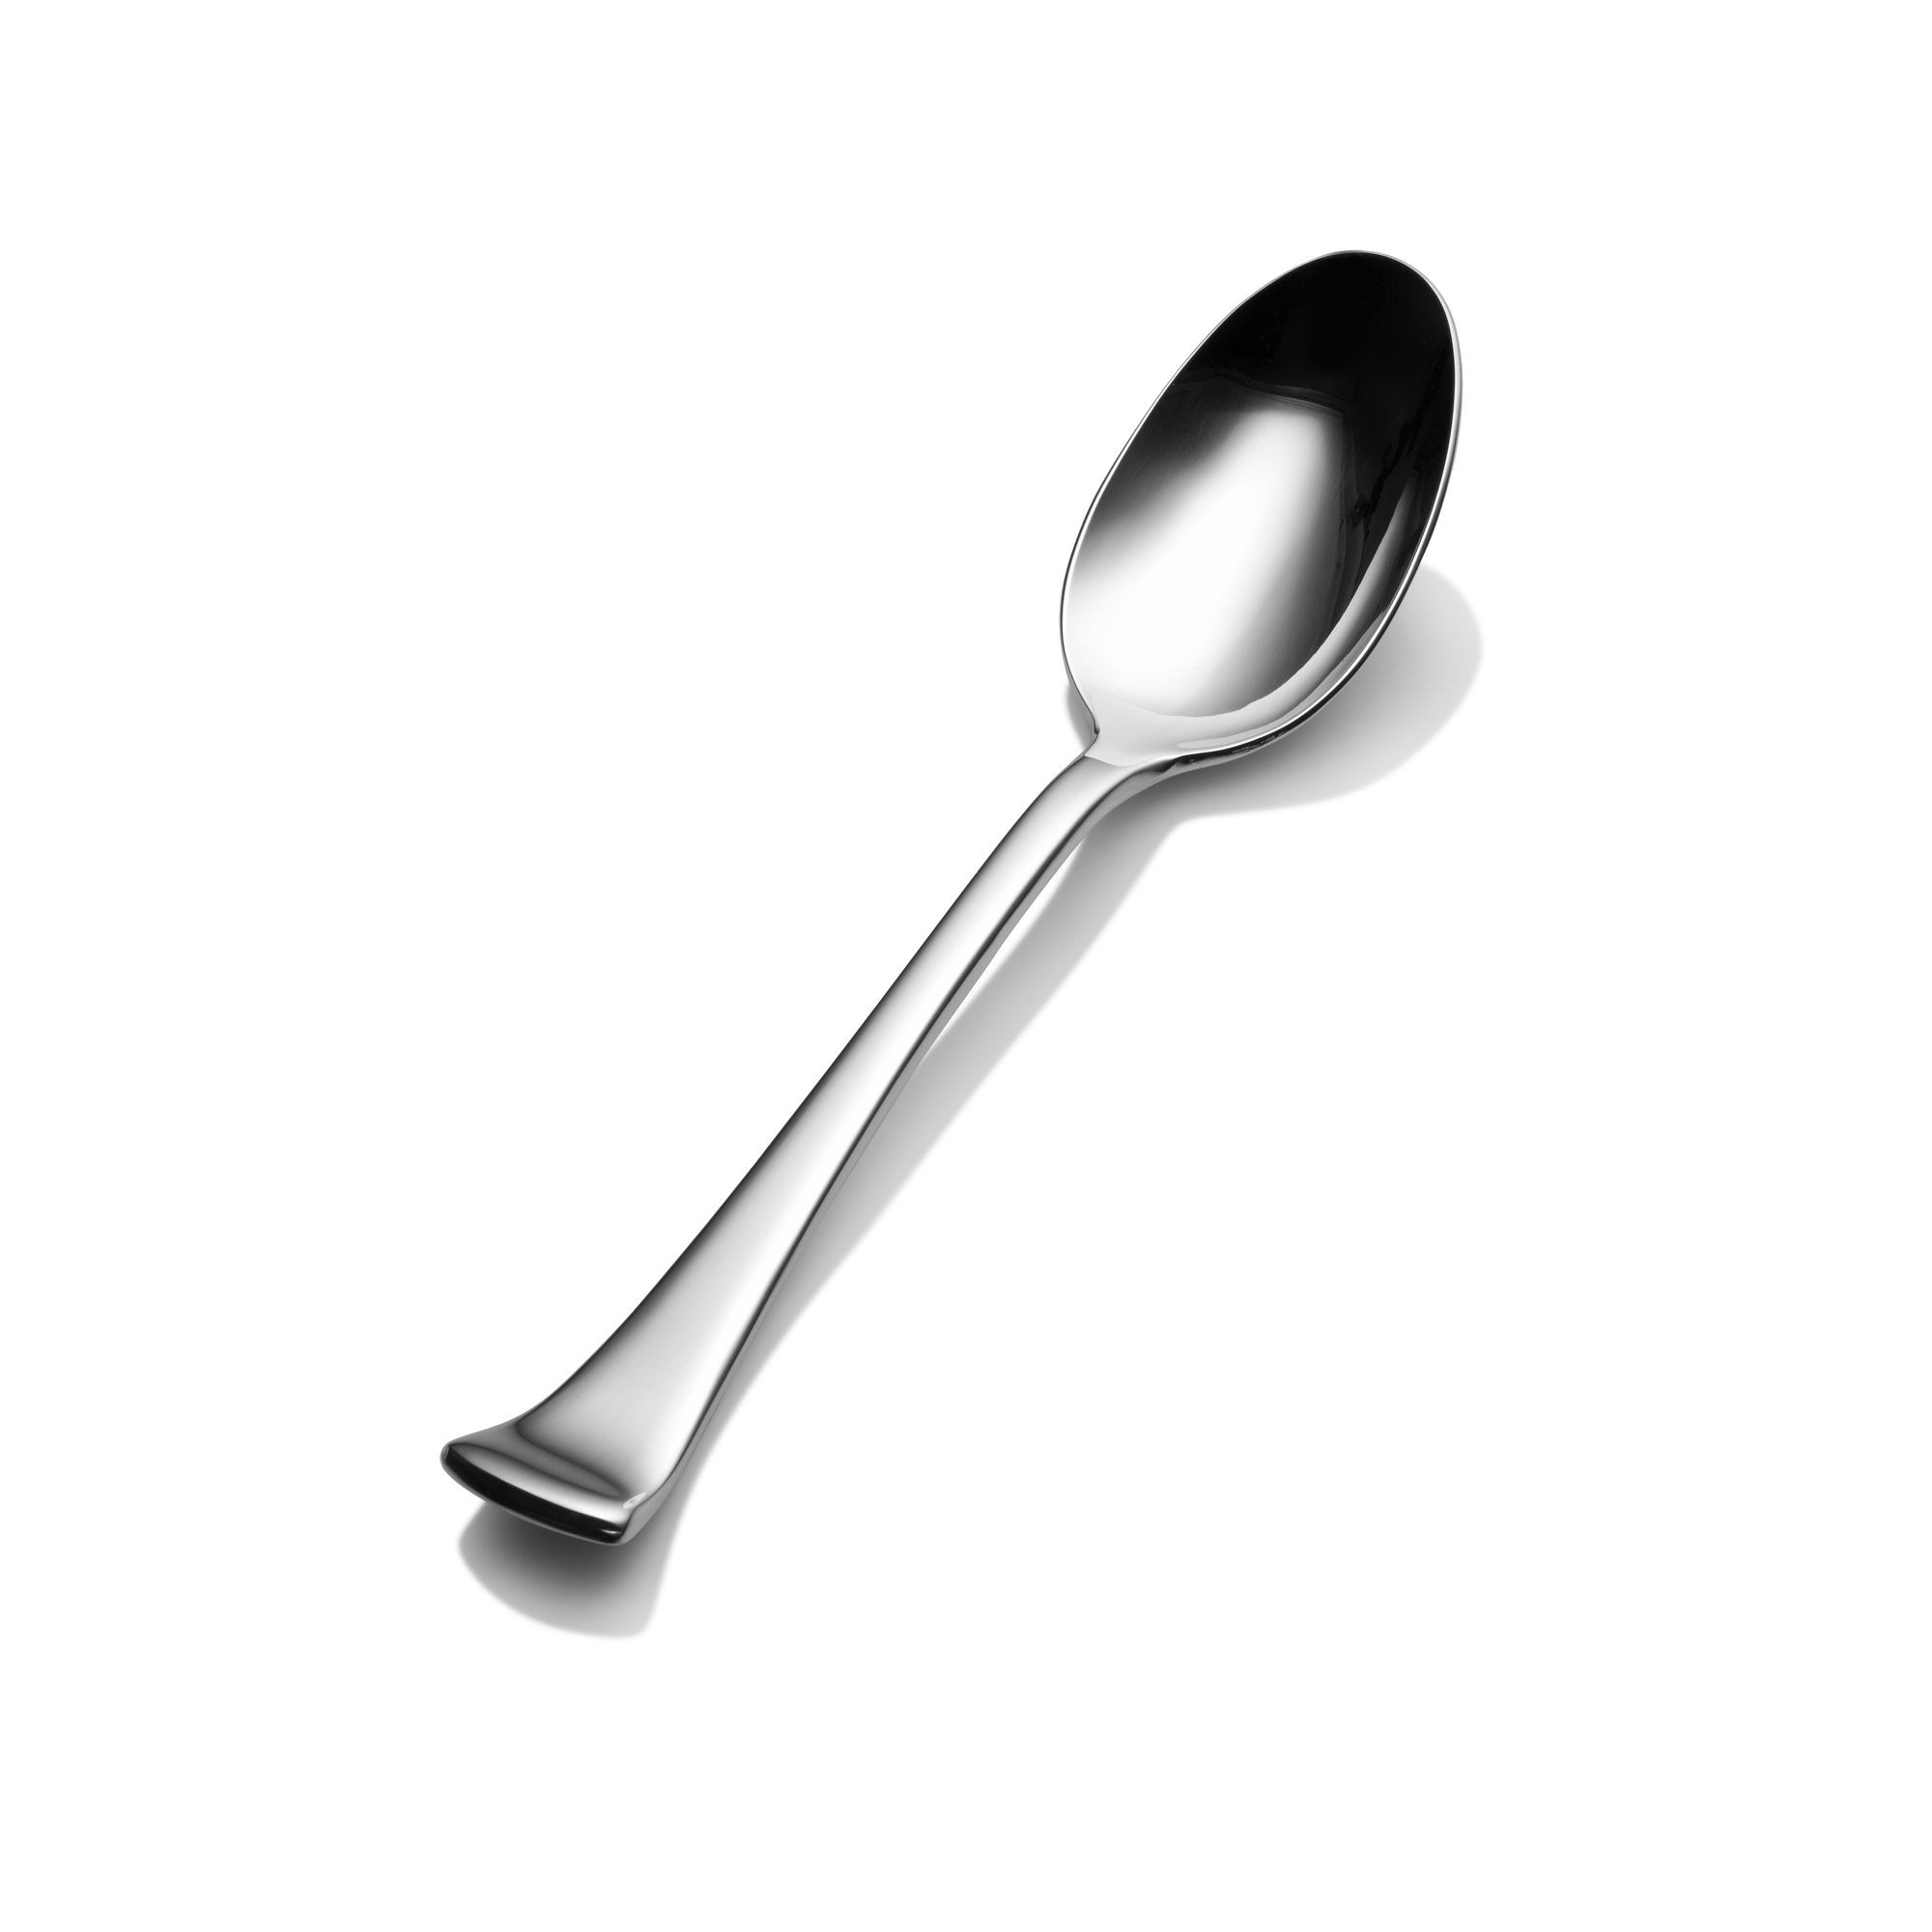 Bon Chef S3204 Aspen 18/8 Stainless Steel Serving Spoon